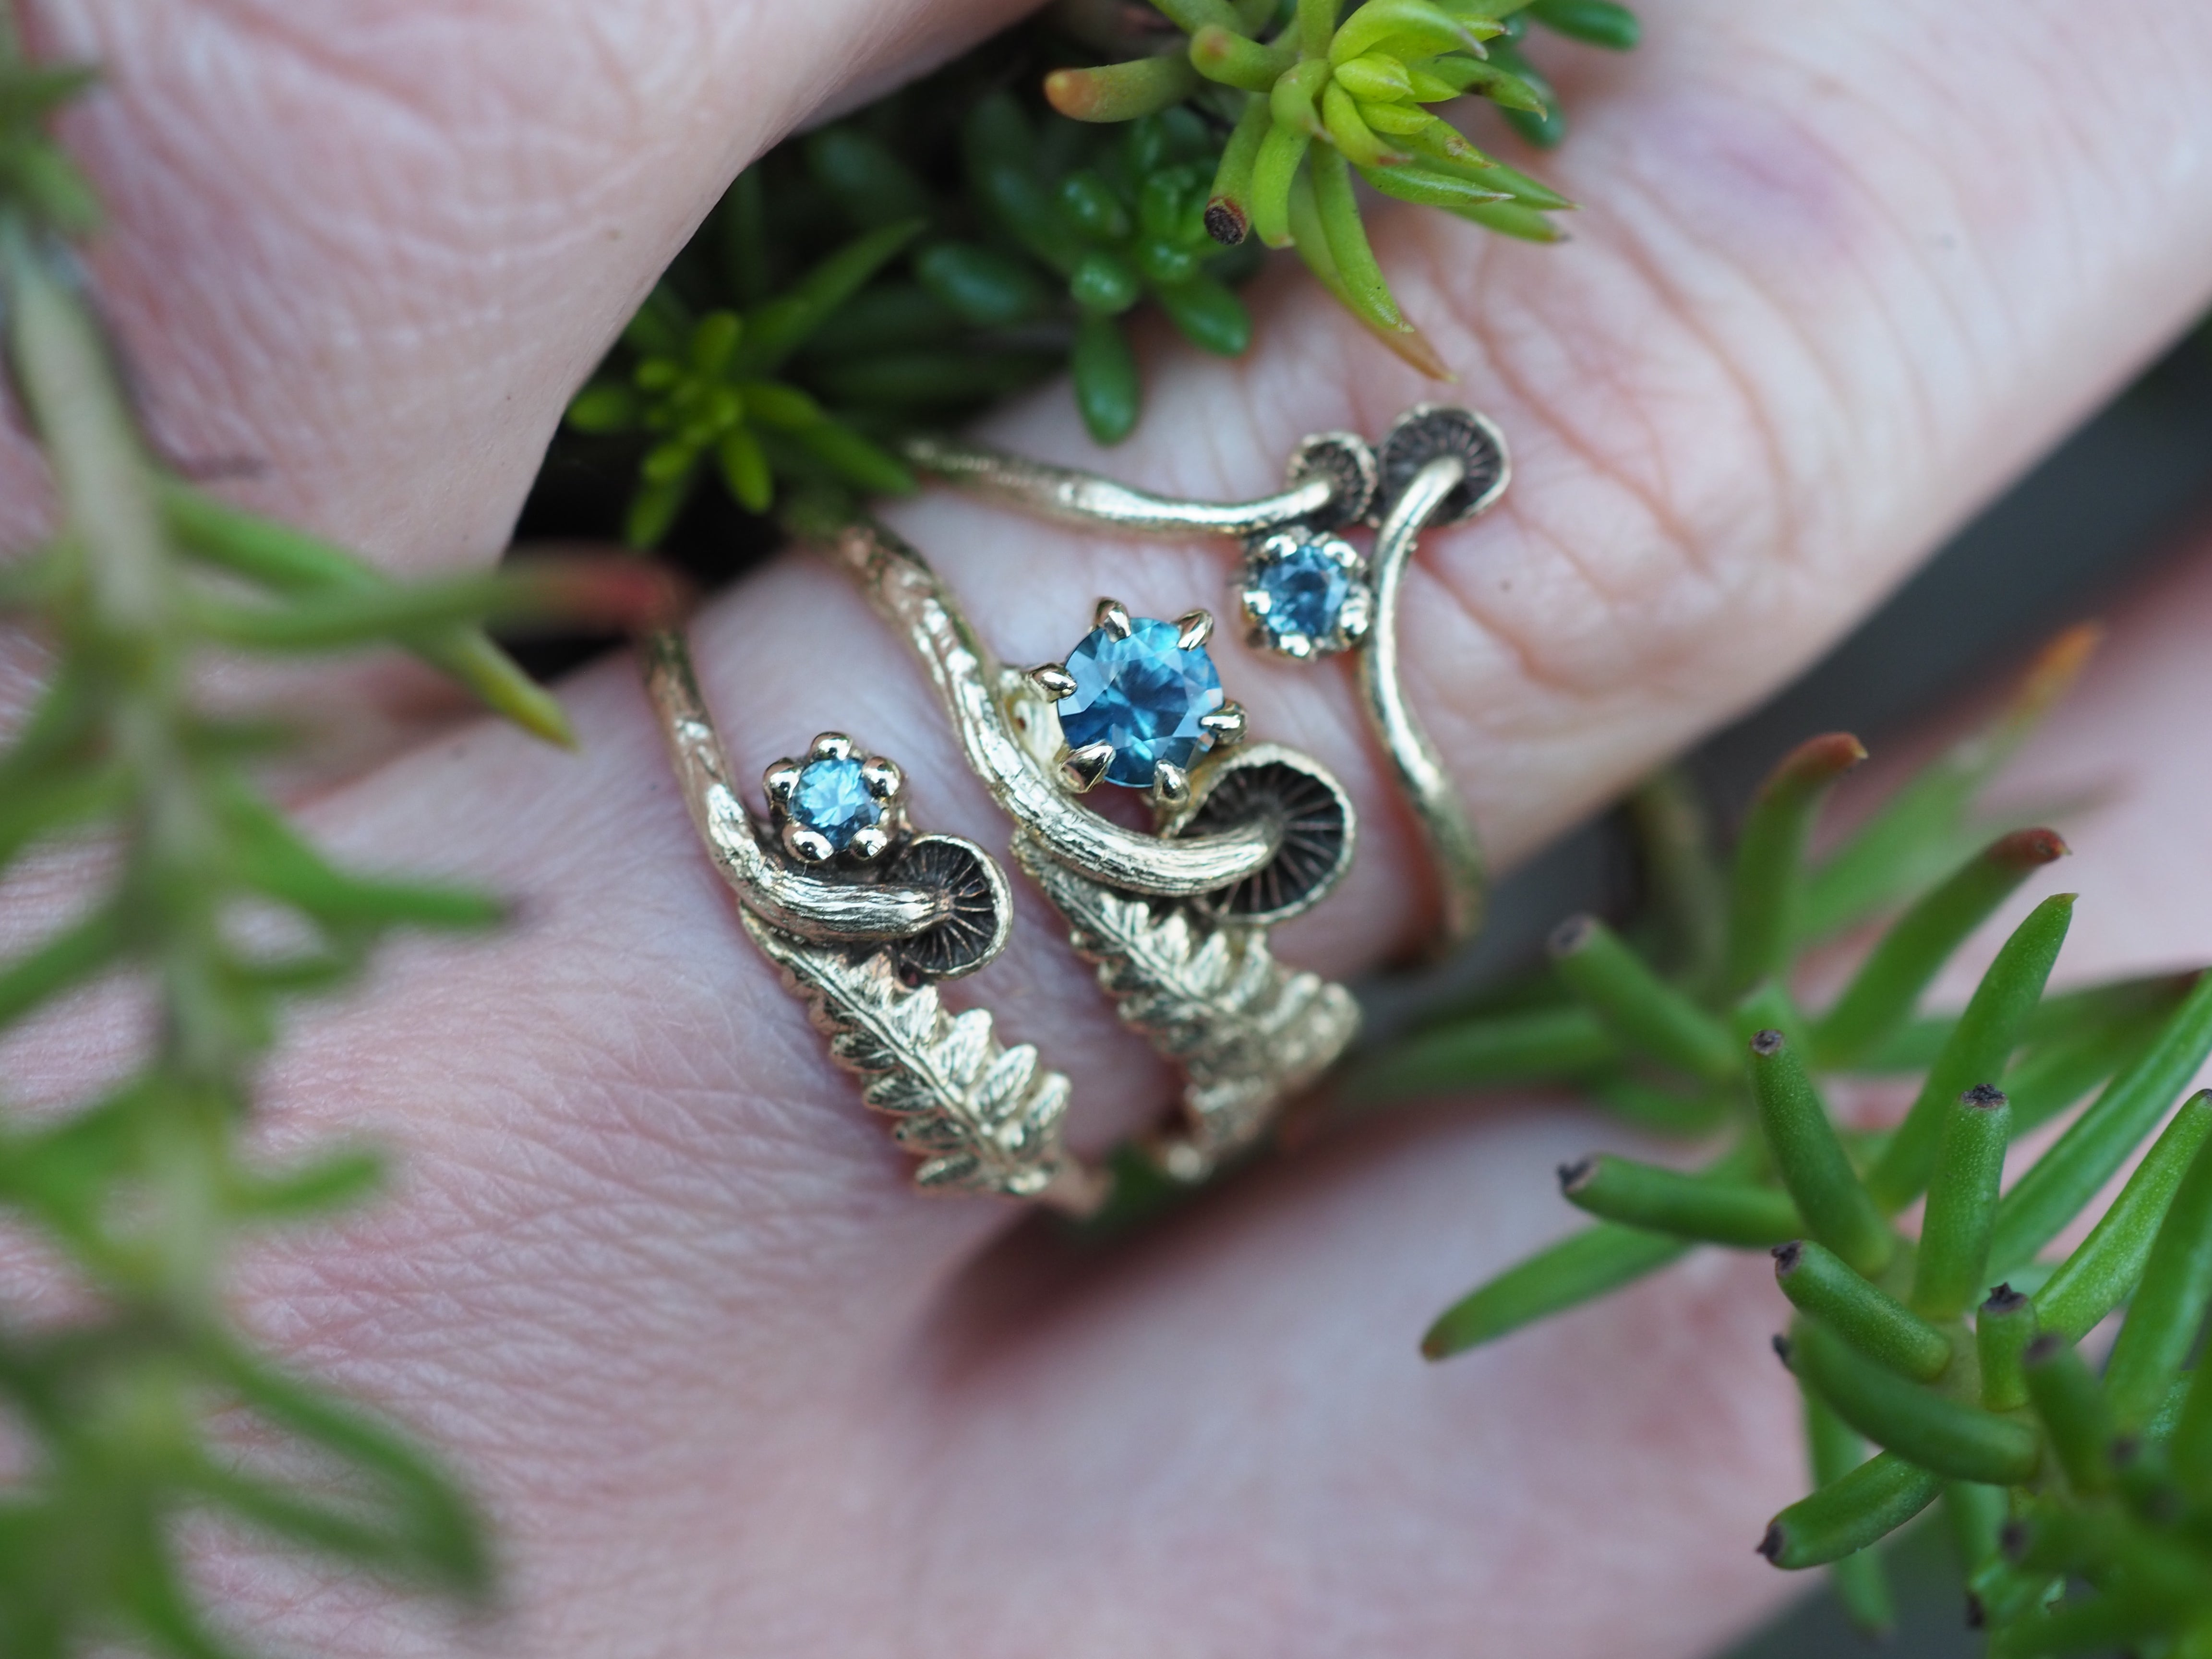 Fern and mushroom gemstone ring mini